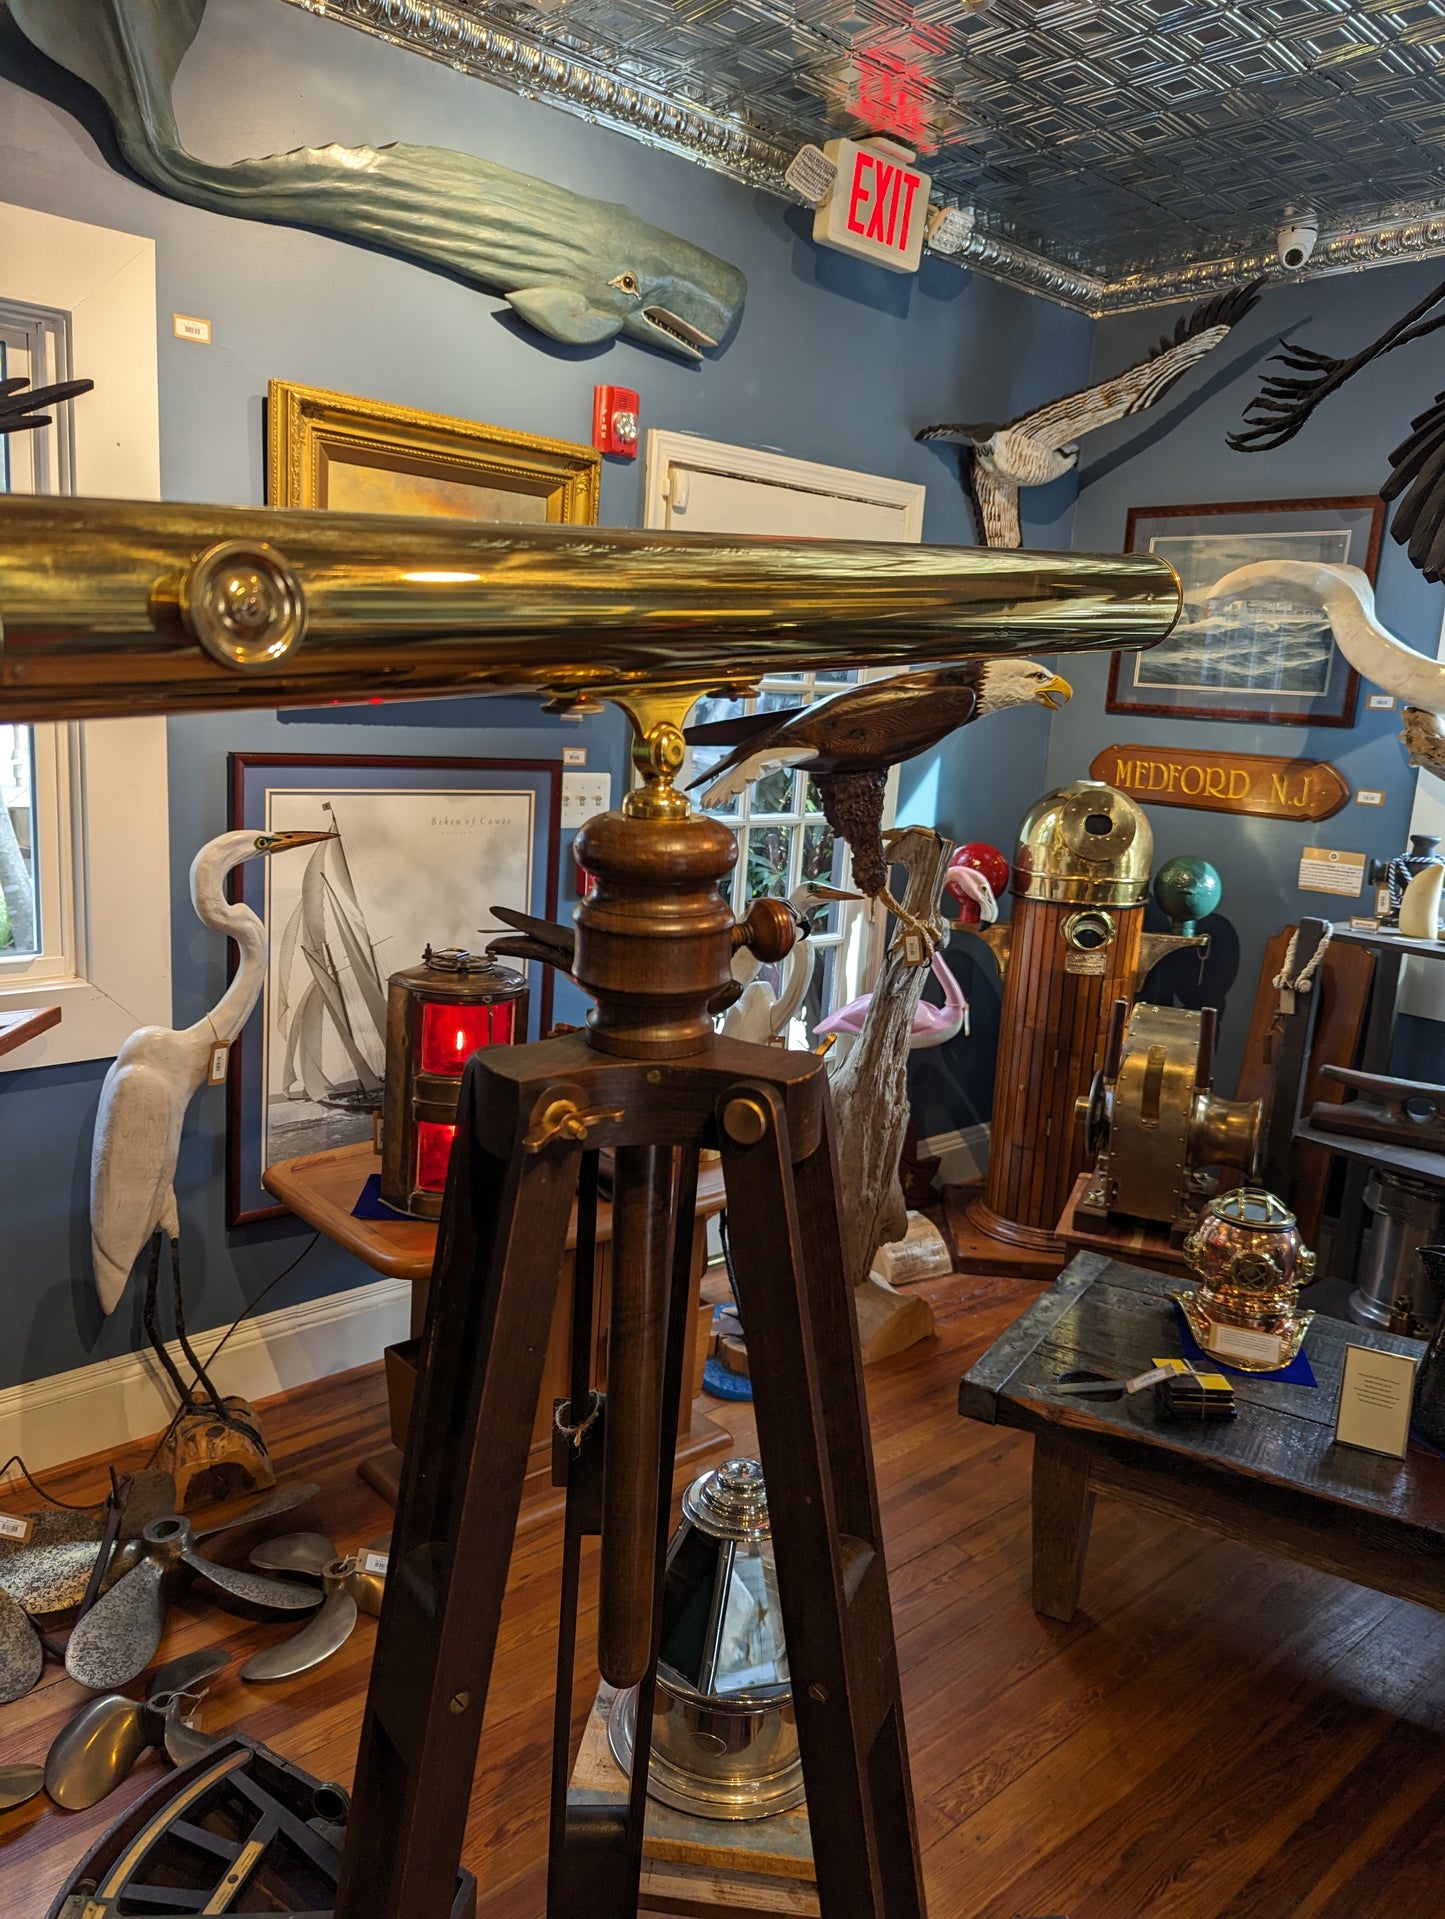 Large brass telescope on wooden tripod